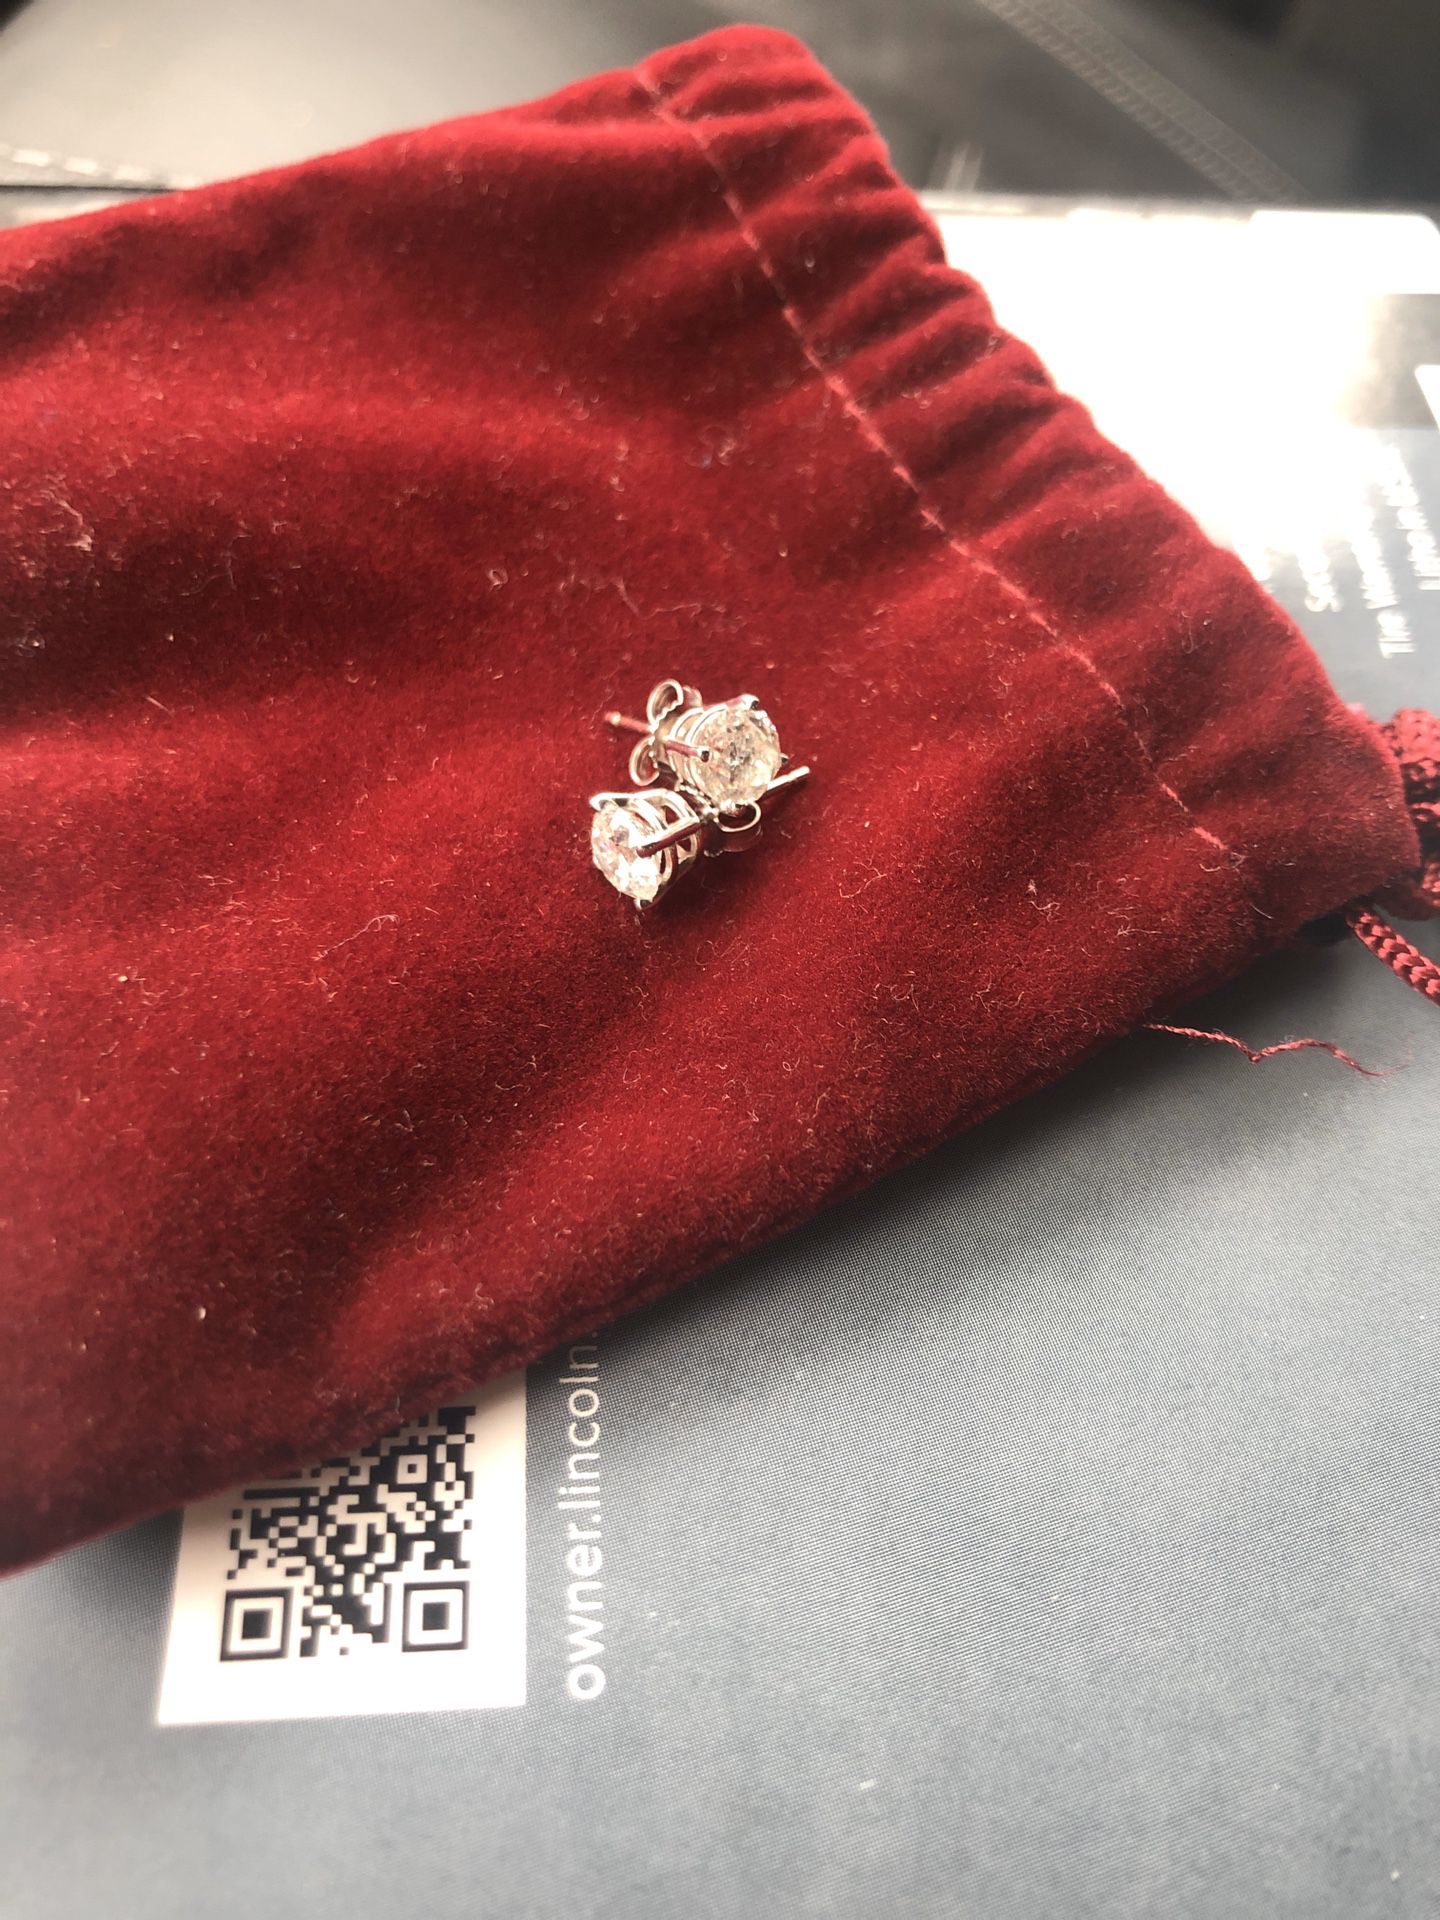 1.5 carat round Diamond Earrings 14k white gold setting- H1 I2